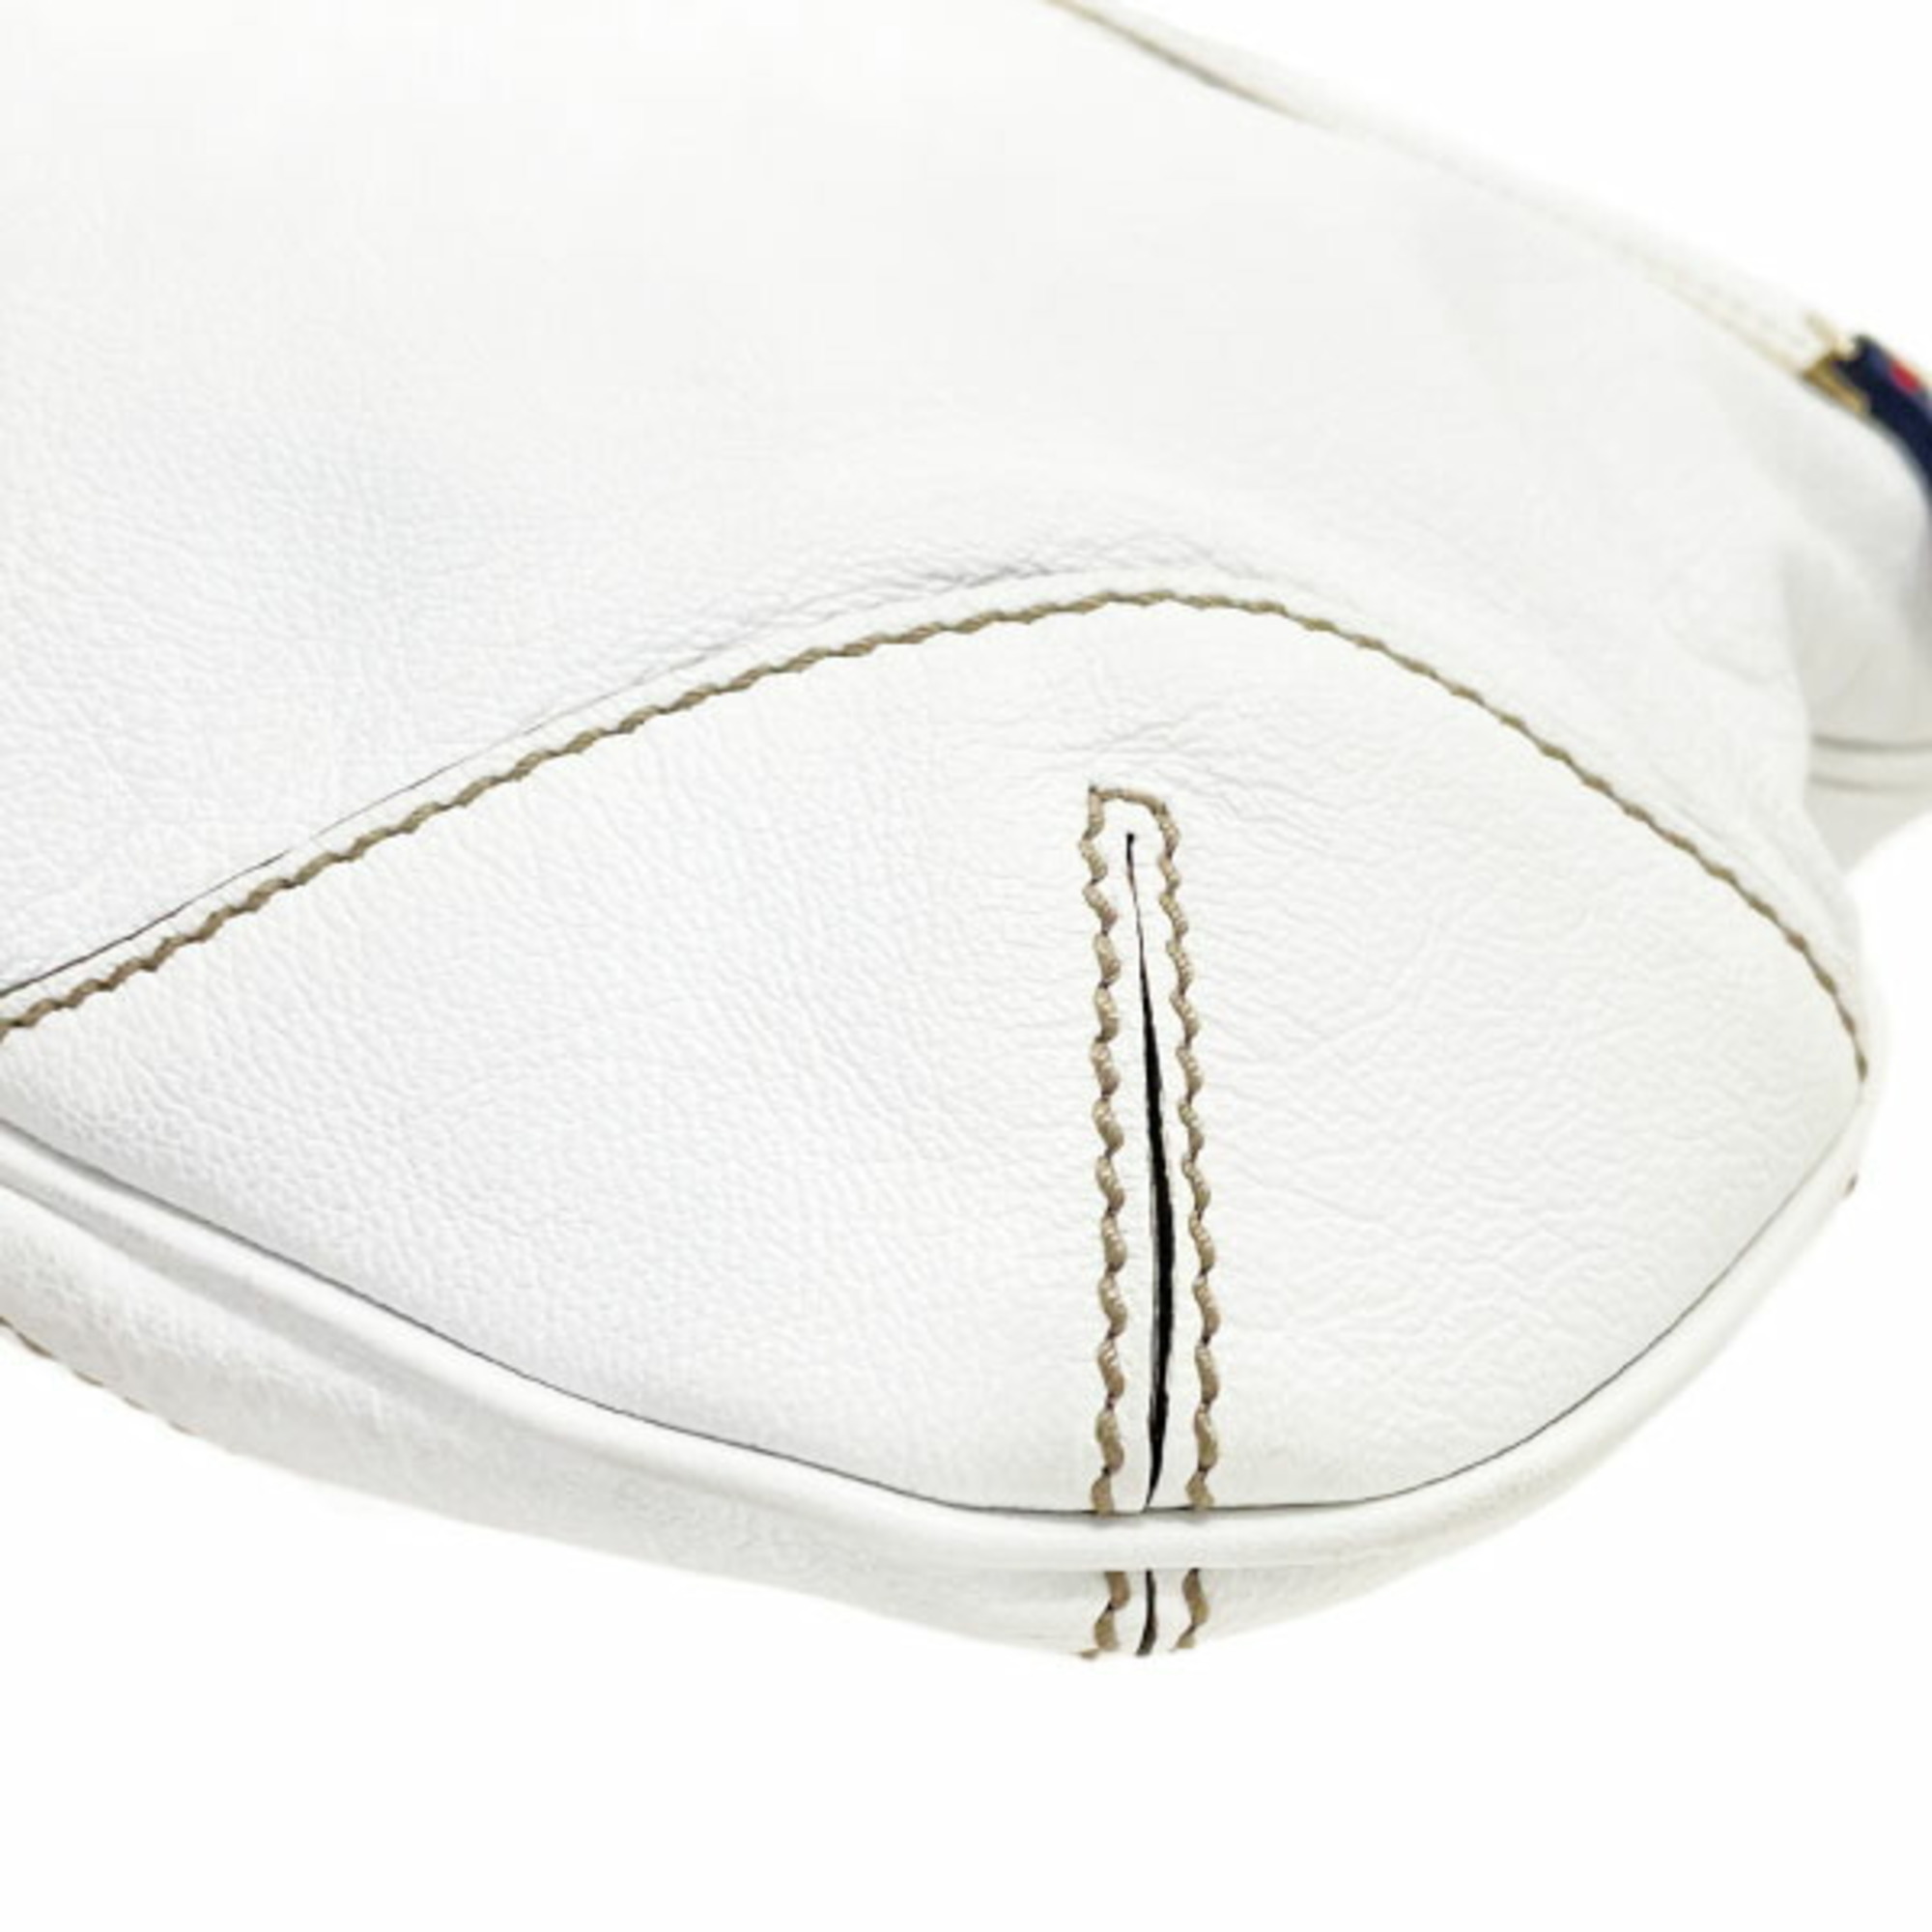 Gucci Handbag Shelly Chain Shoulder Bag Leather White 154392 GUCCI